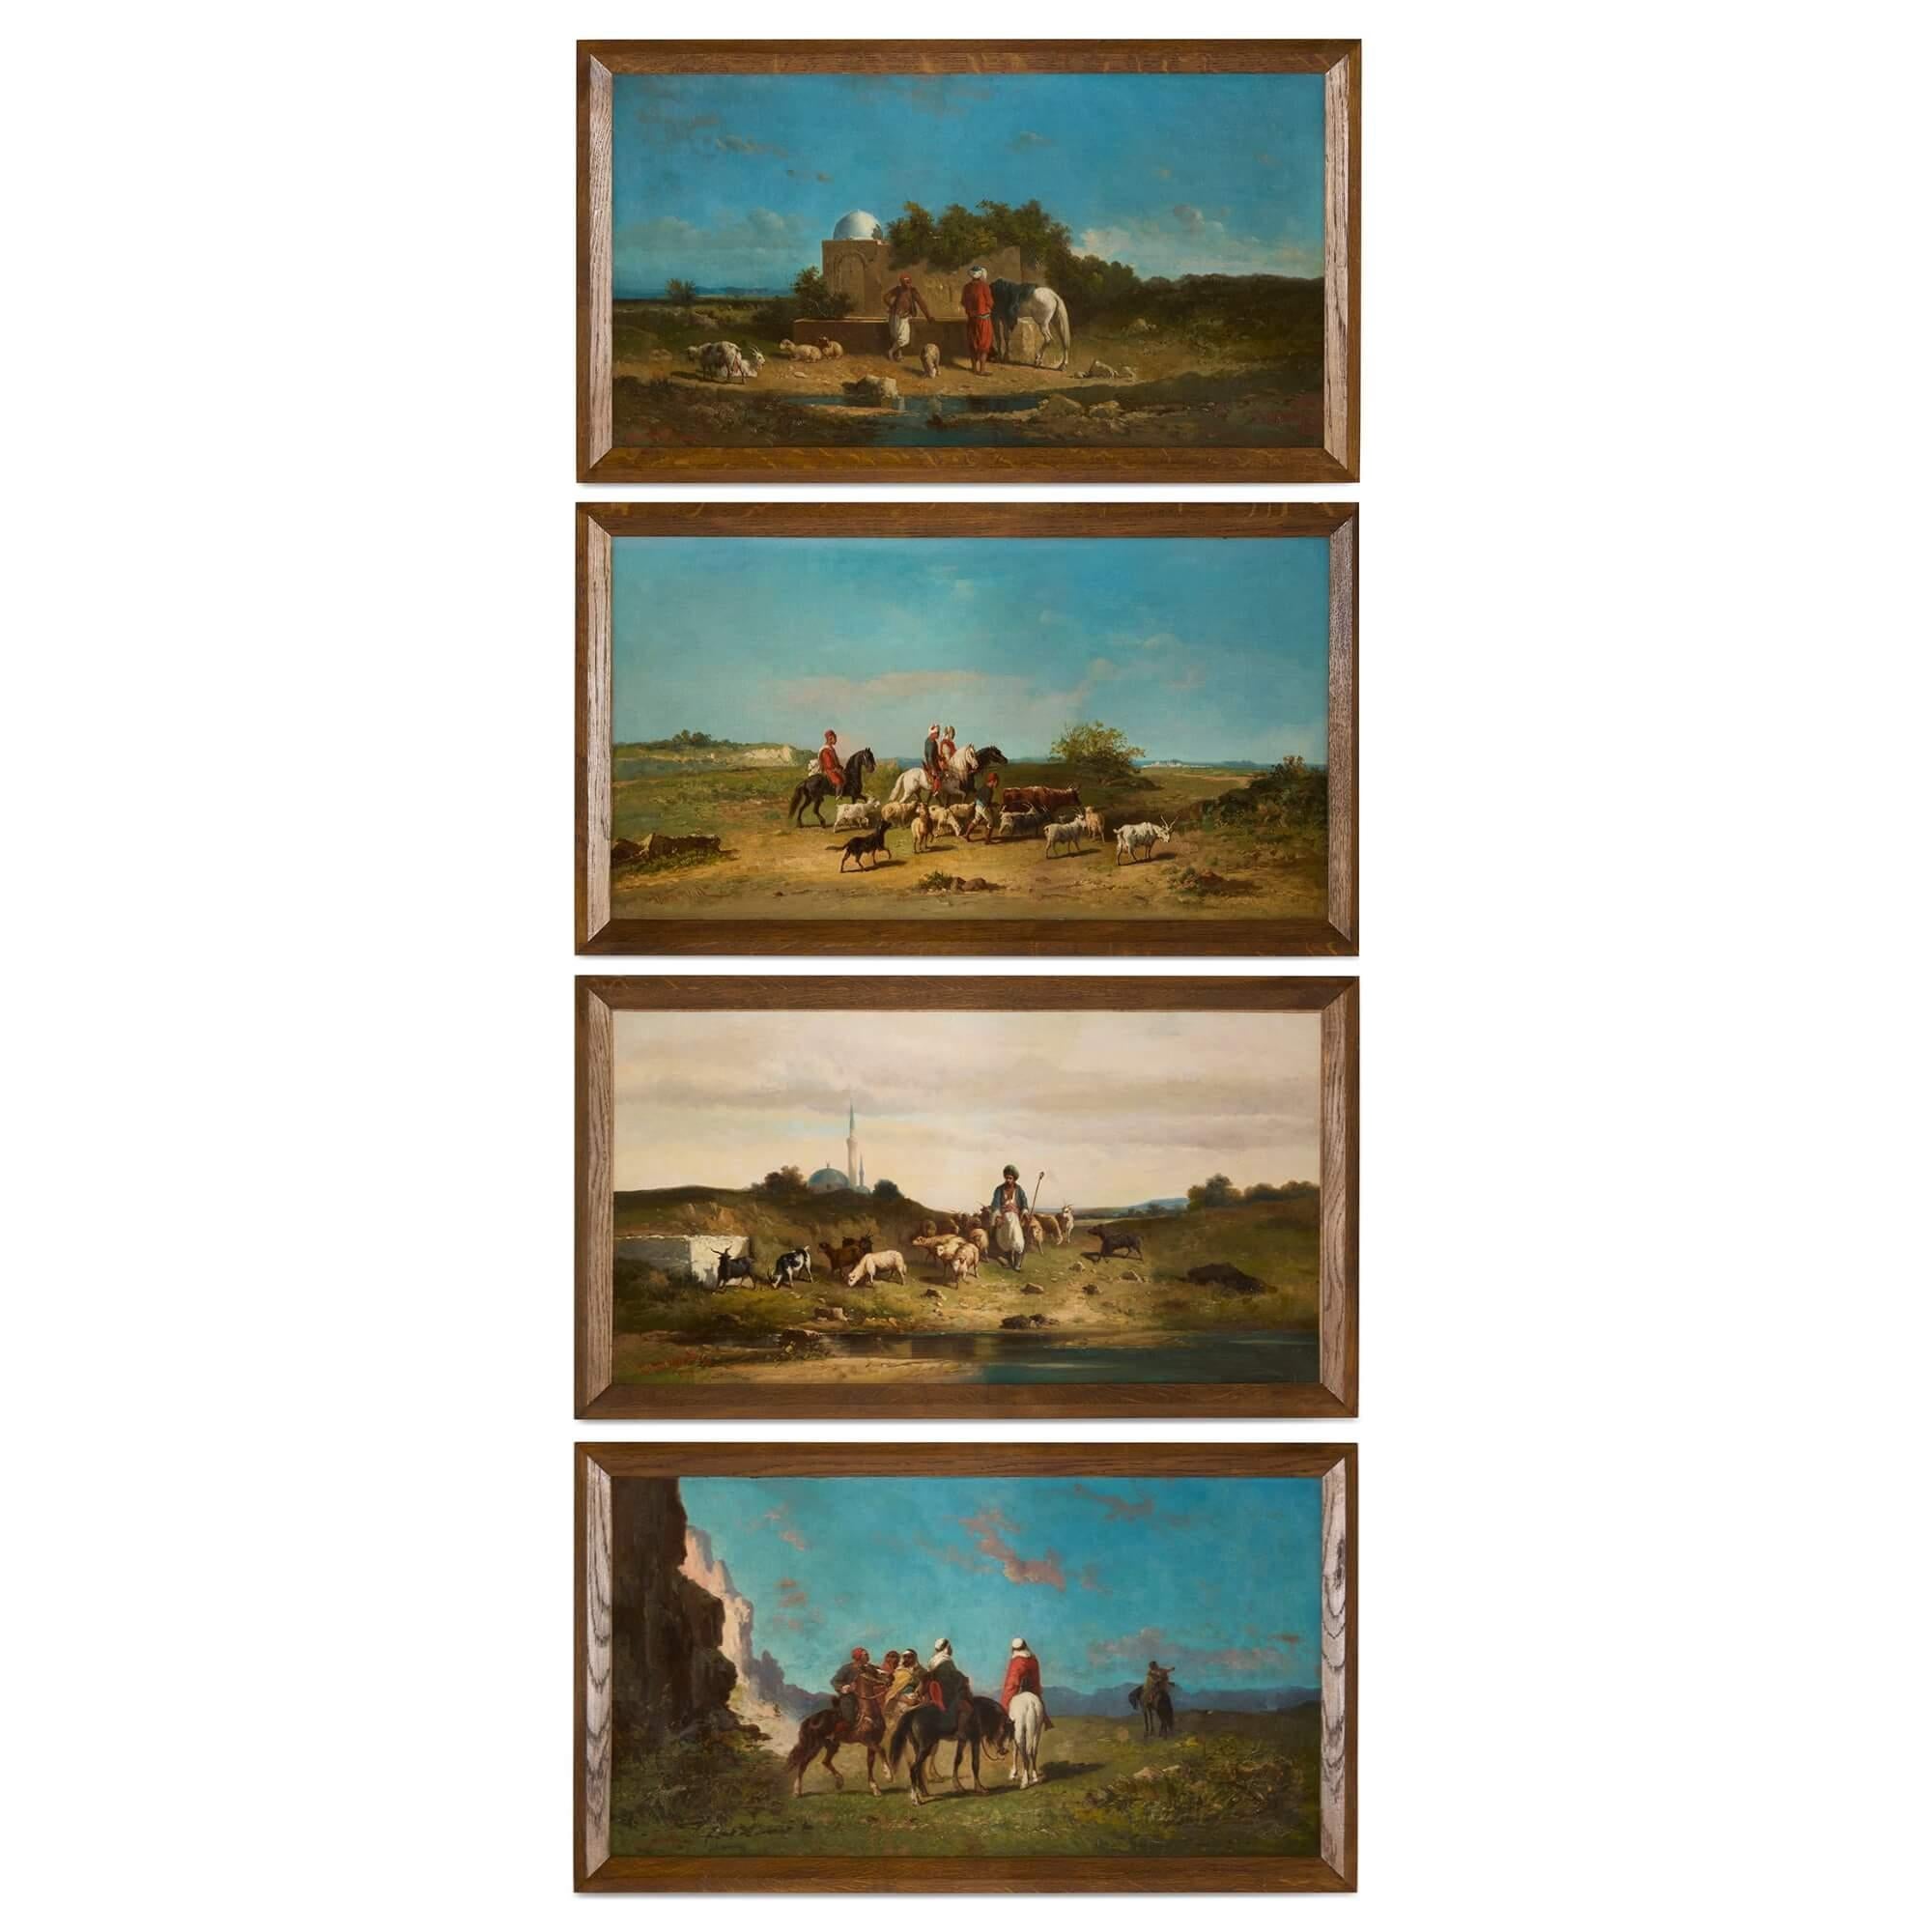 Figurative Painting Henri van Wijk - Ensemble de quatre peintures de paysages orientalistes de van Wijk 